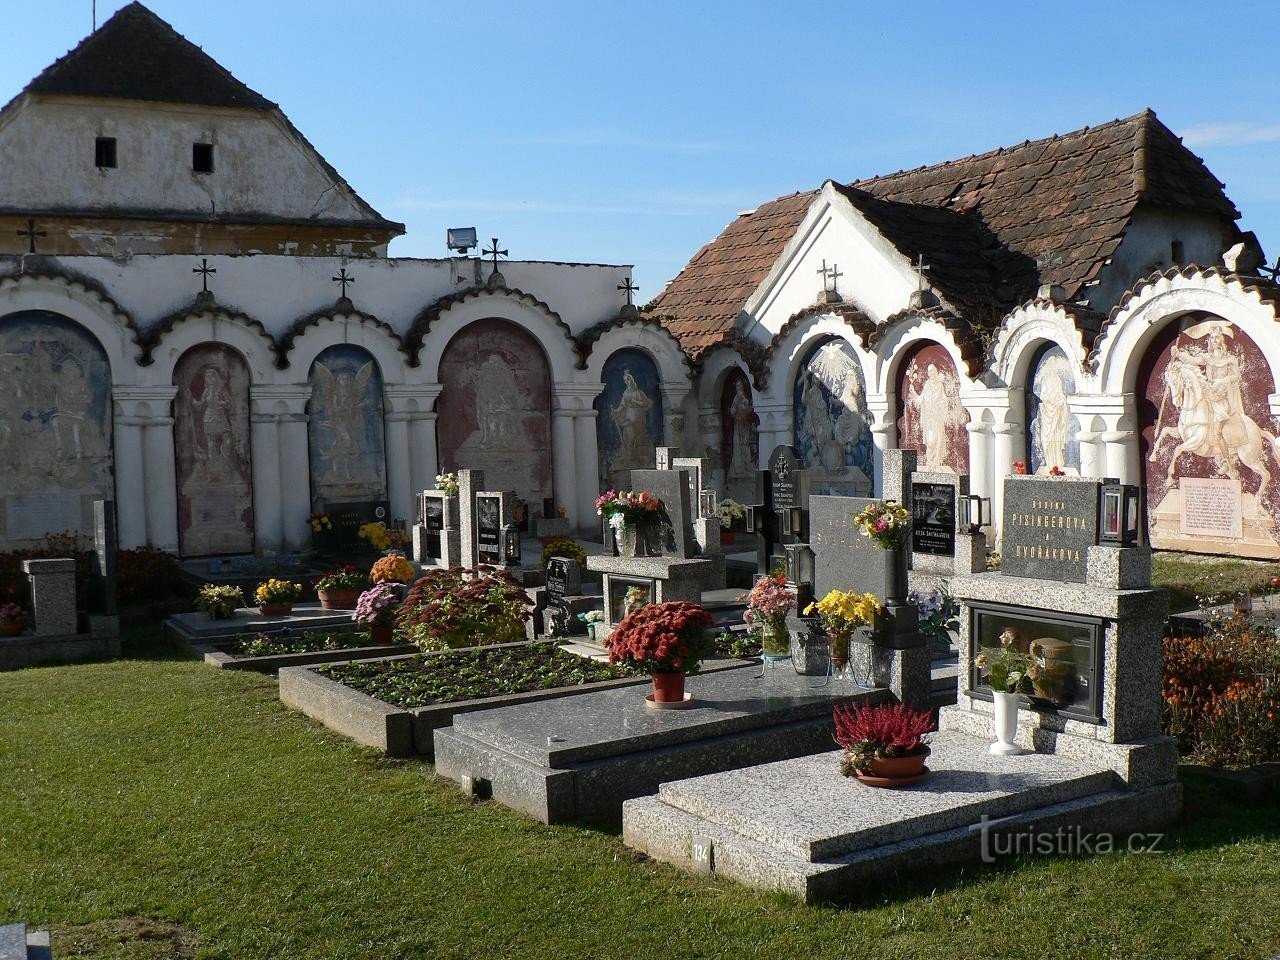 Albrechtice nad Vltavou, góc nghĩa trang